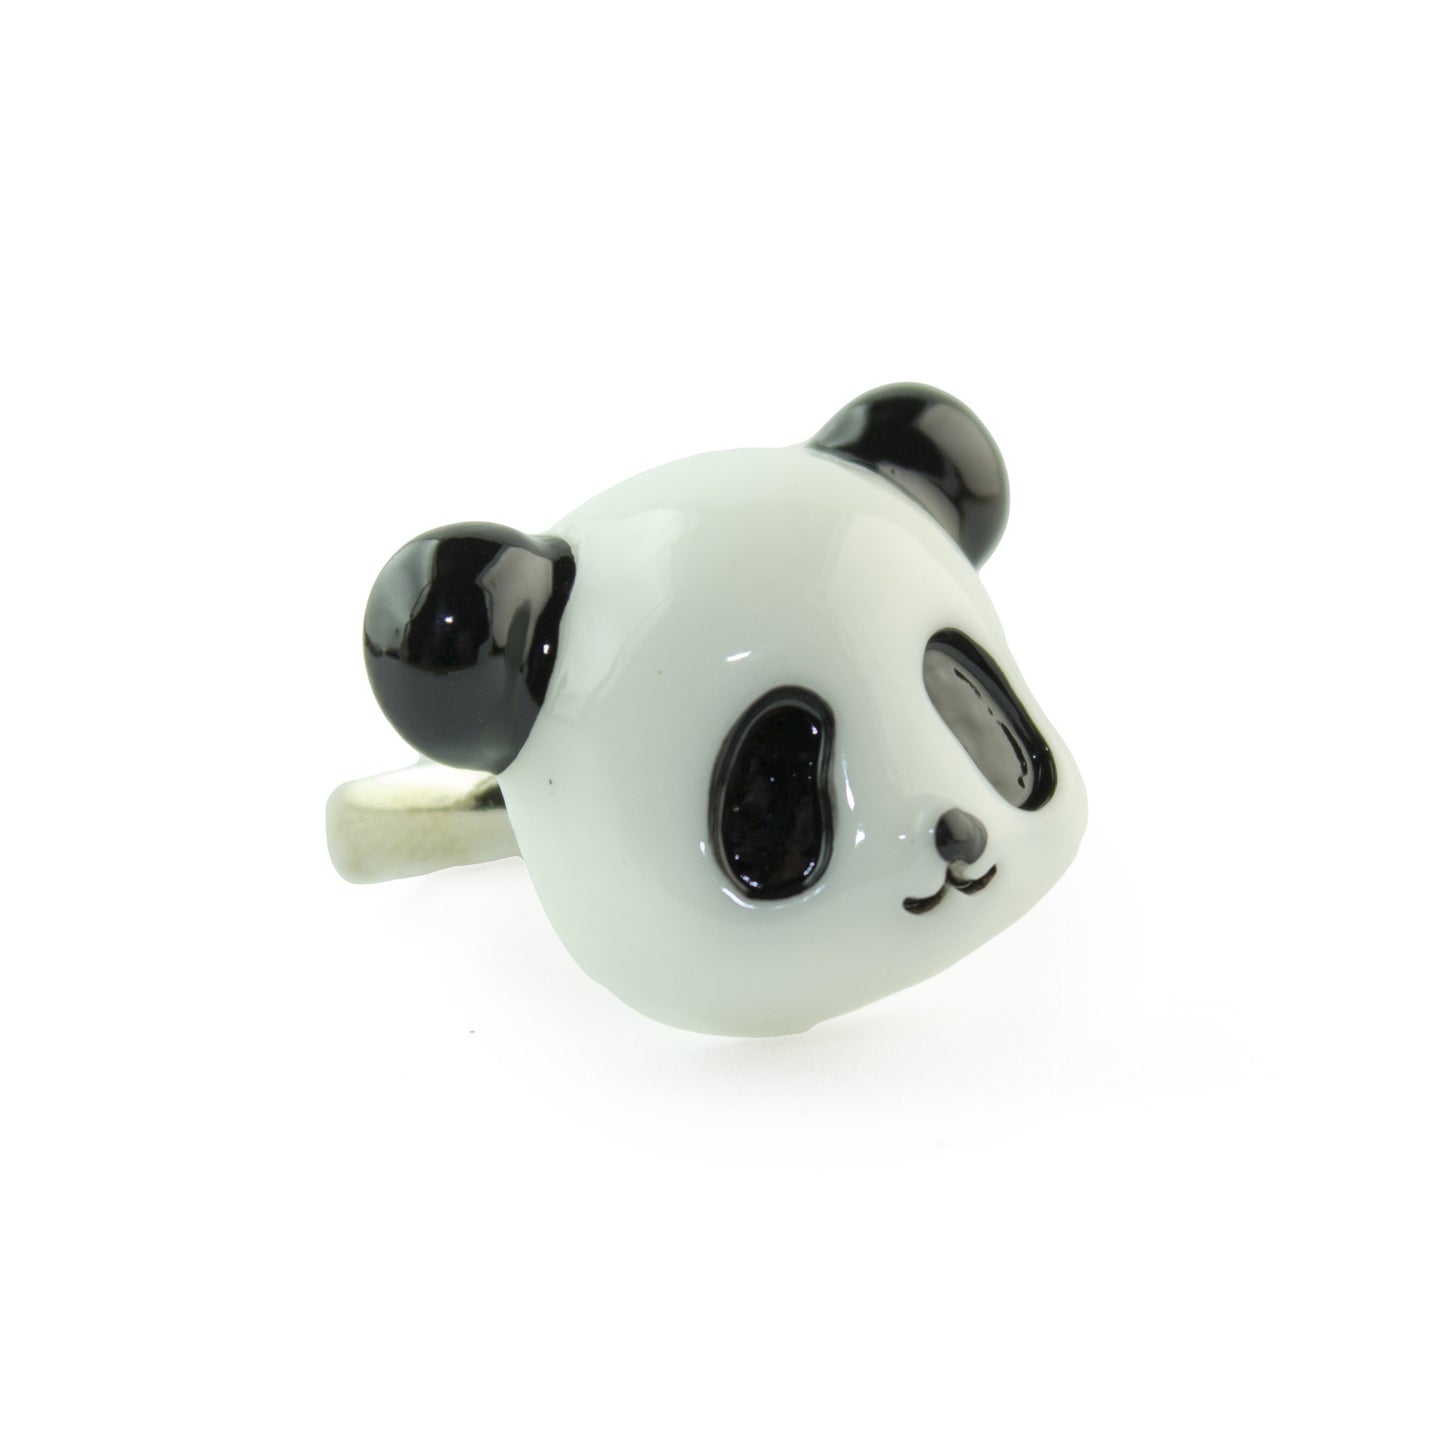 Pop Cutie Panda Ring